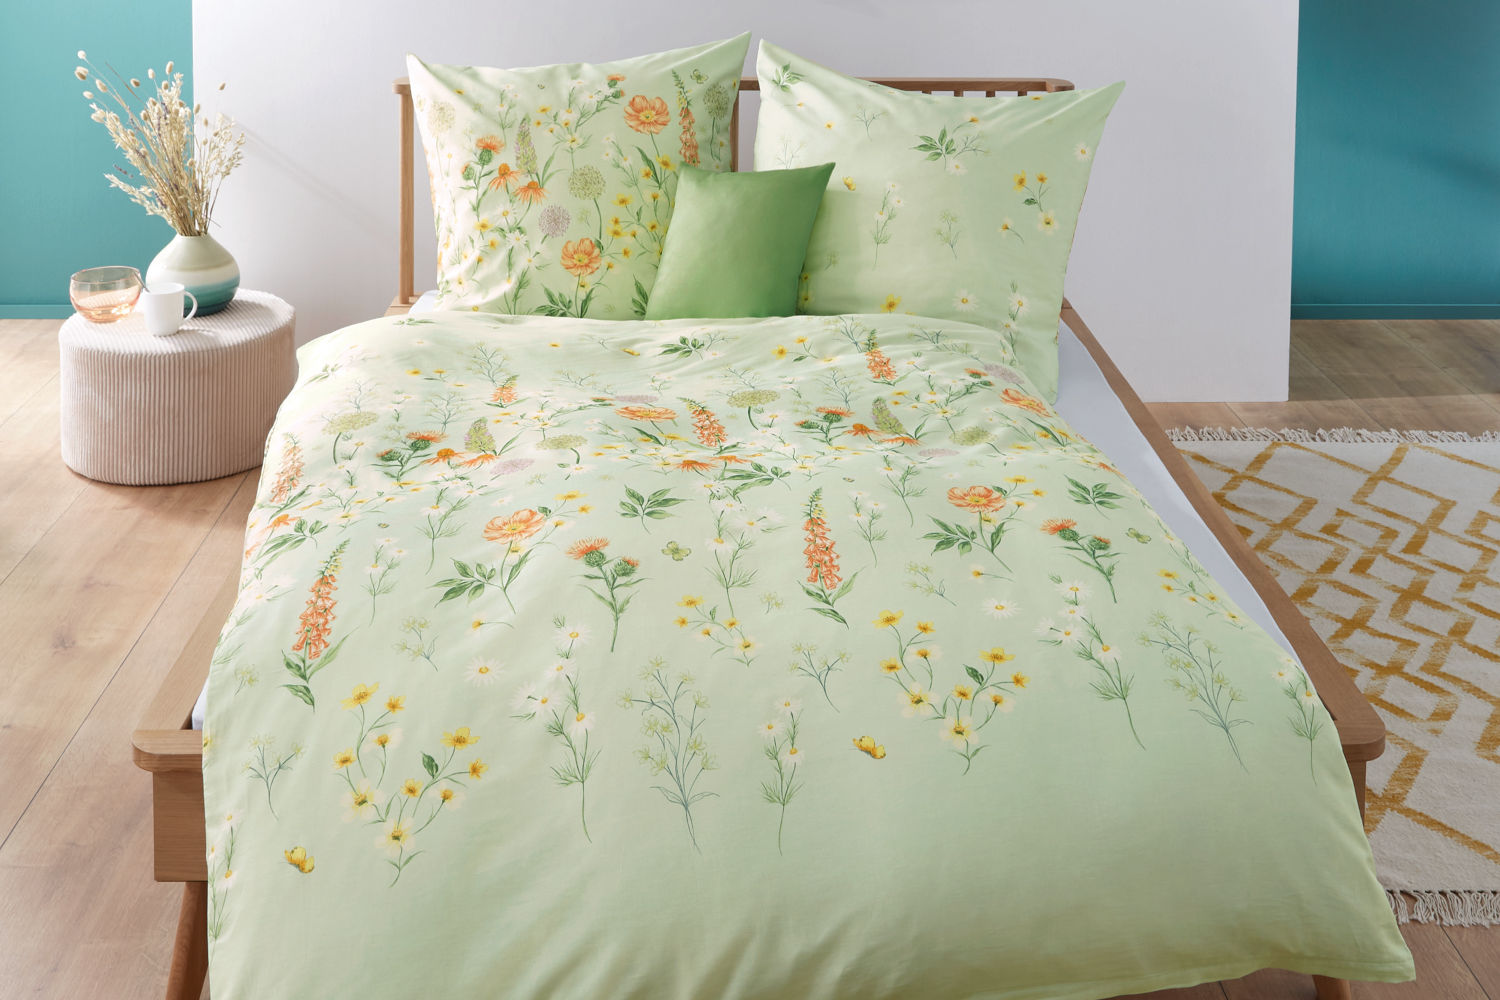 Kaeppel Mako-Satin Wiesenblume grün, Bettwäsche aus 100% Baumwolle, 135x200cm